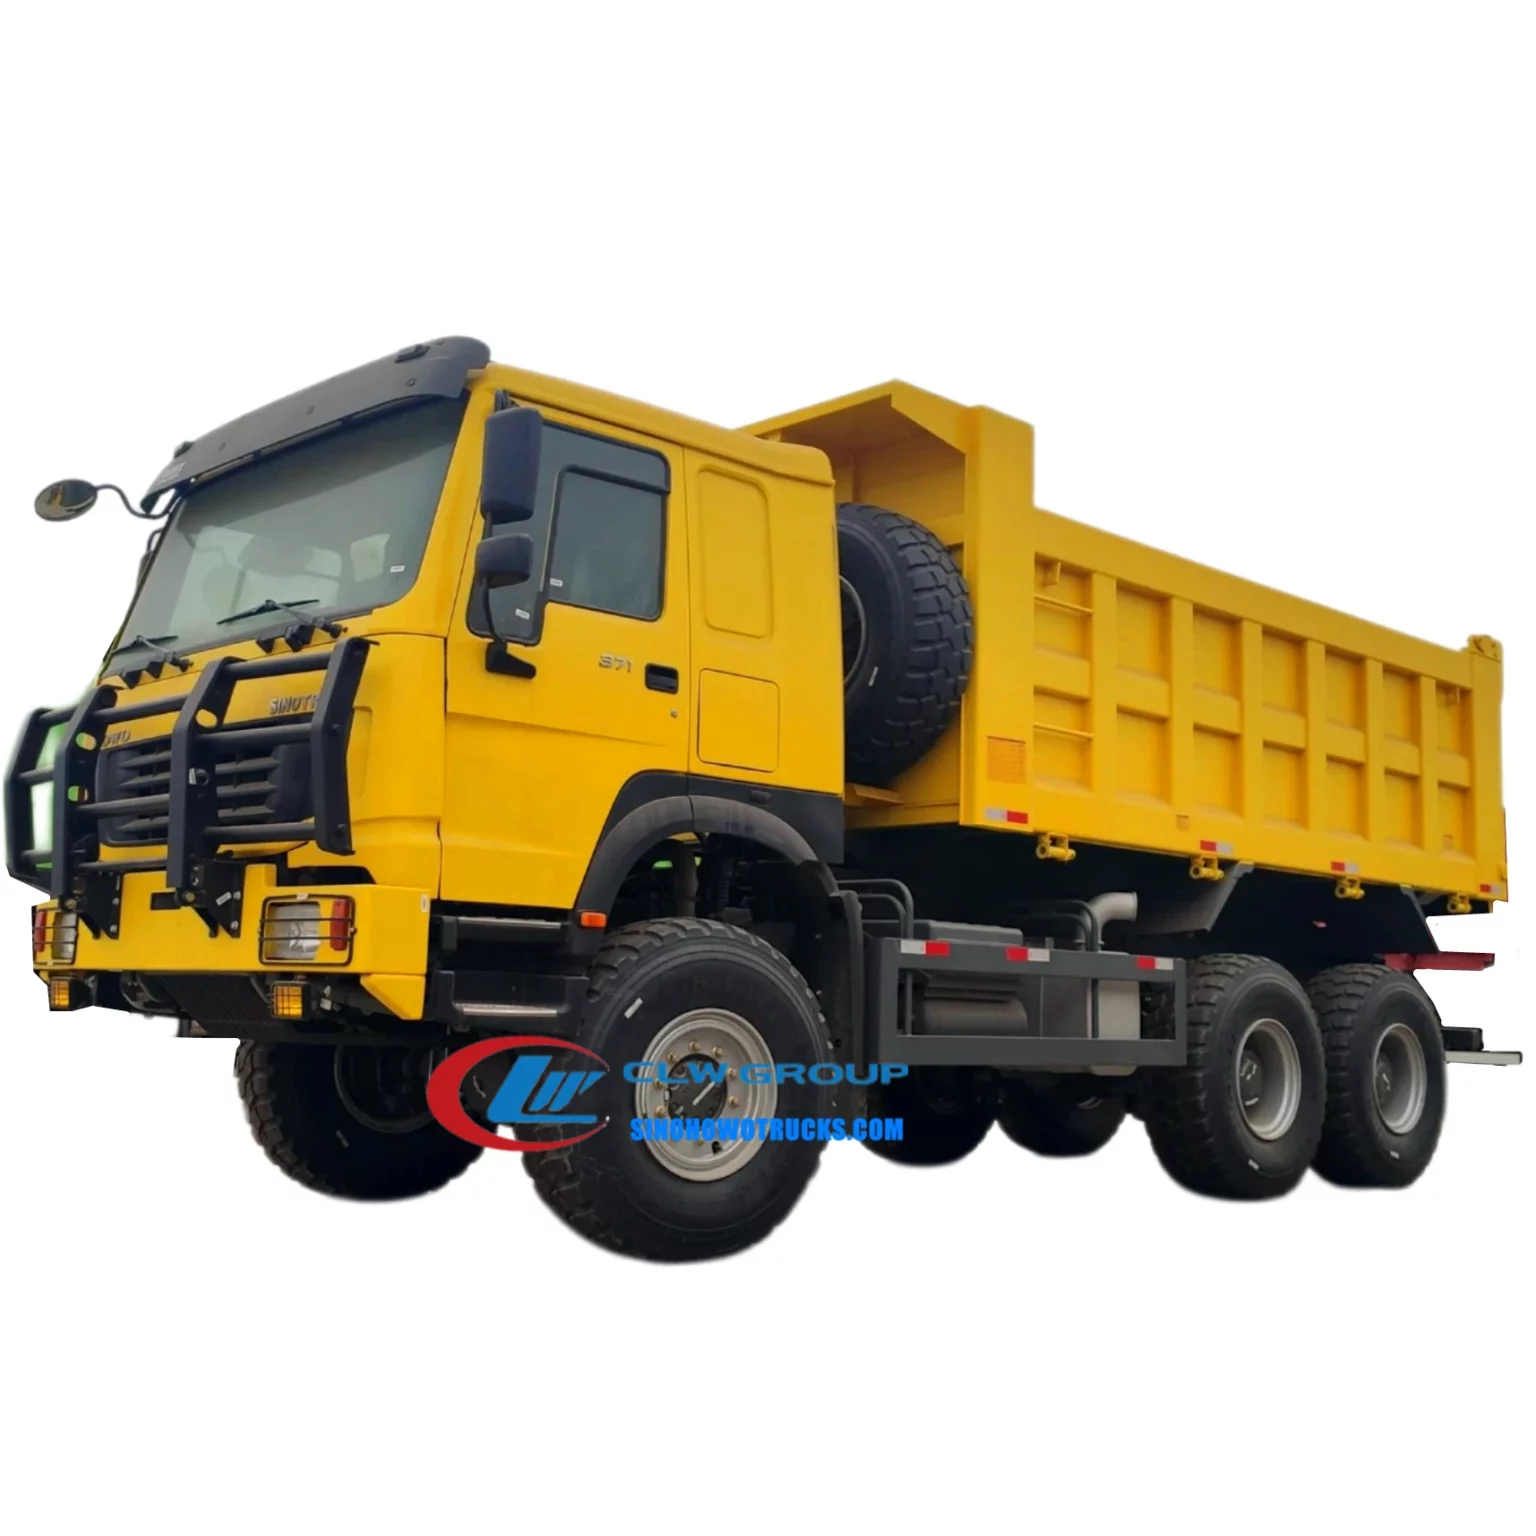 6x6 Sinotruk Howo off road dump truck for sale Congo (Kinshasa)